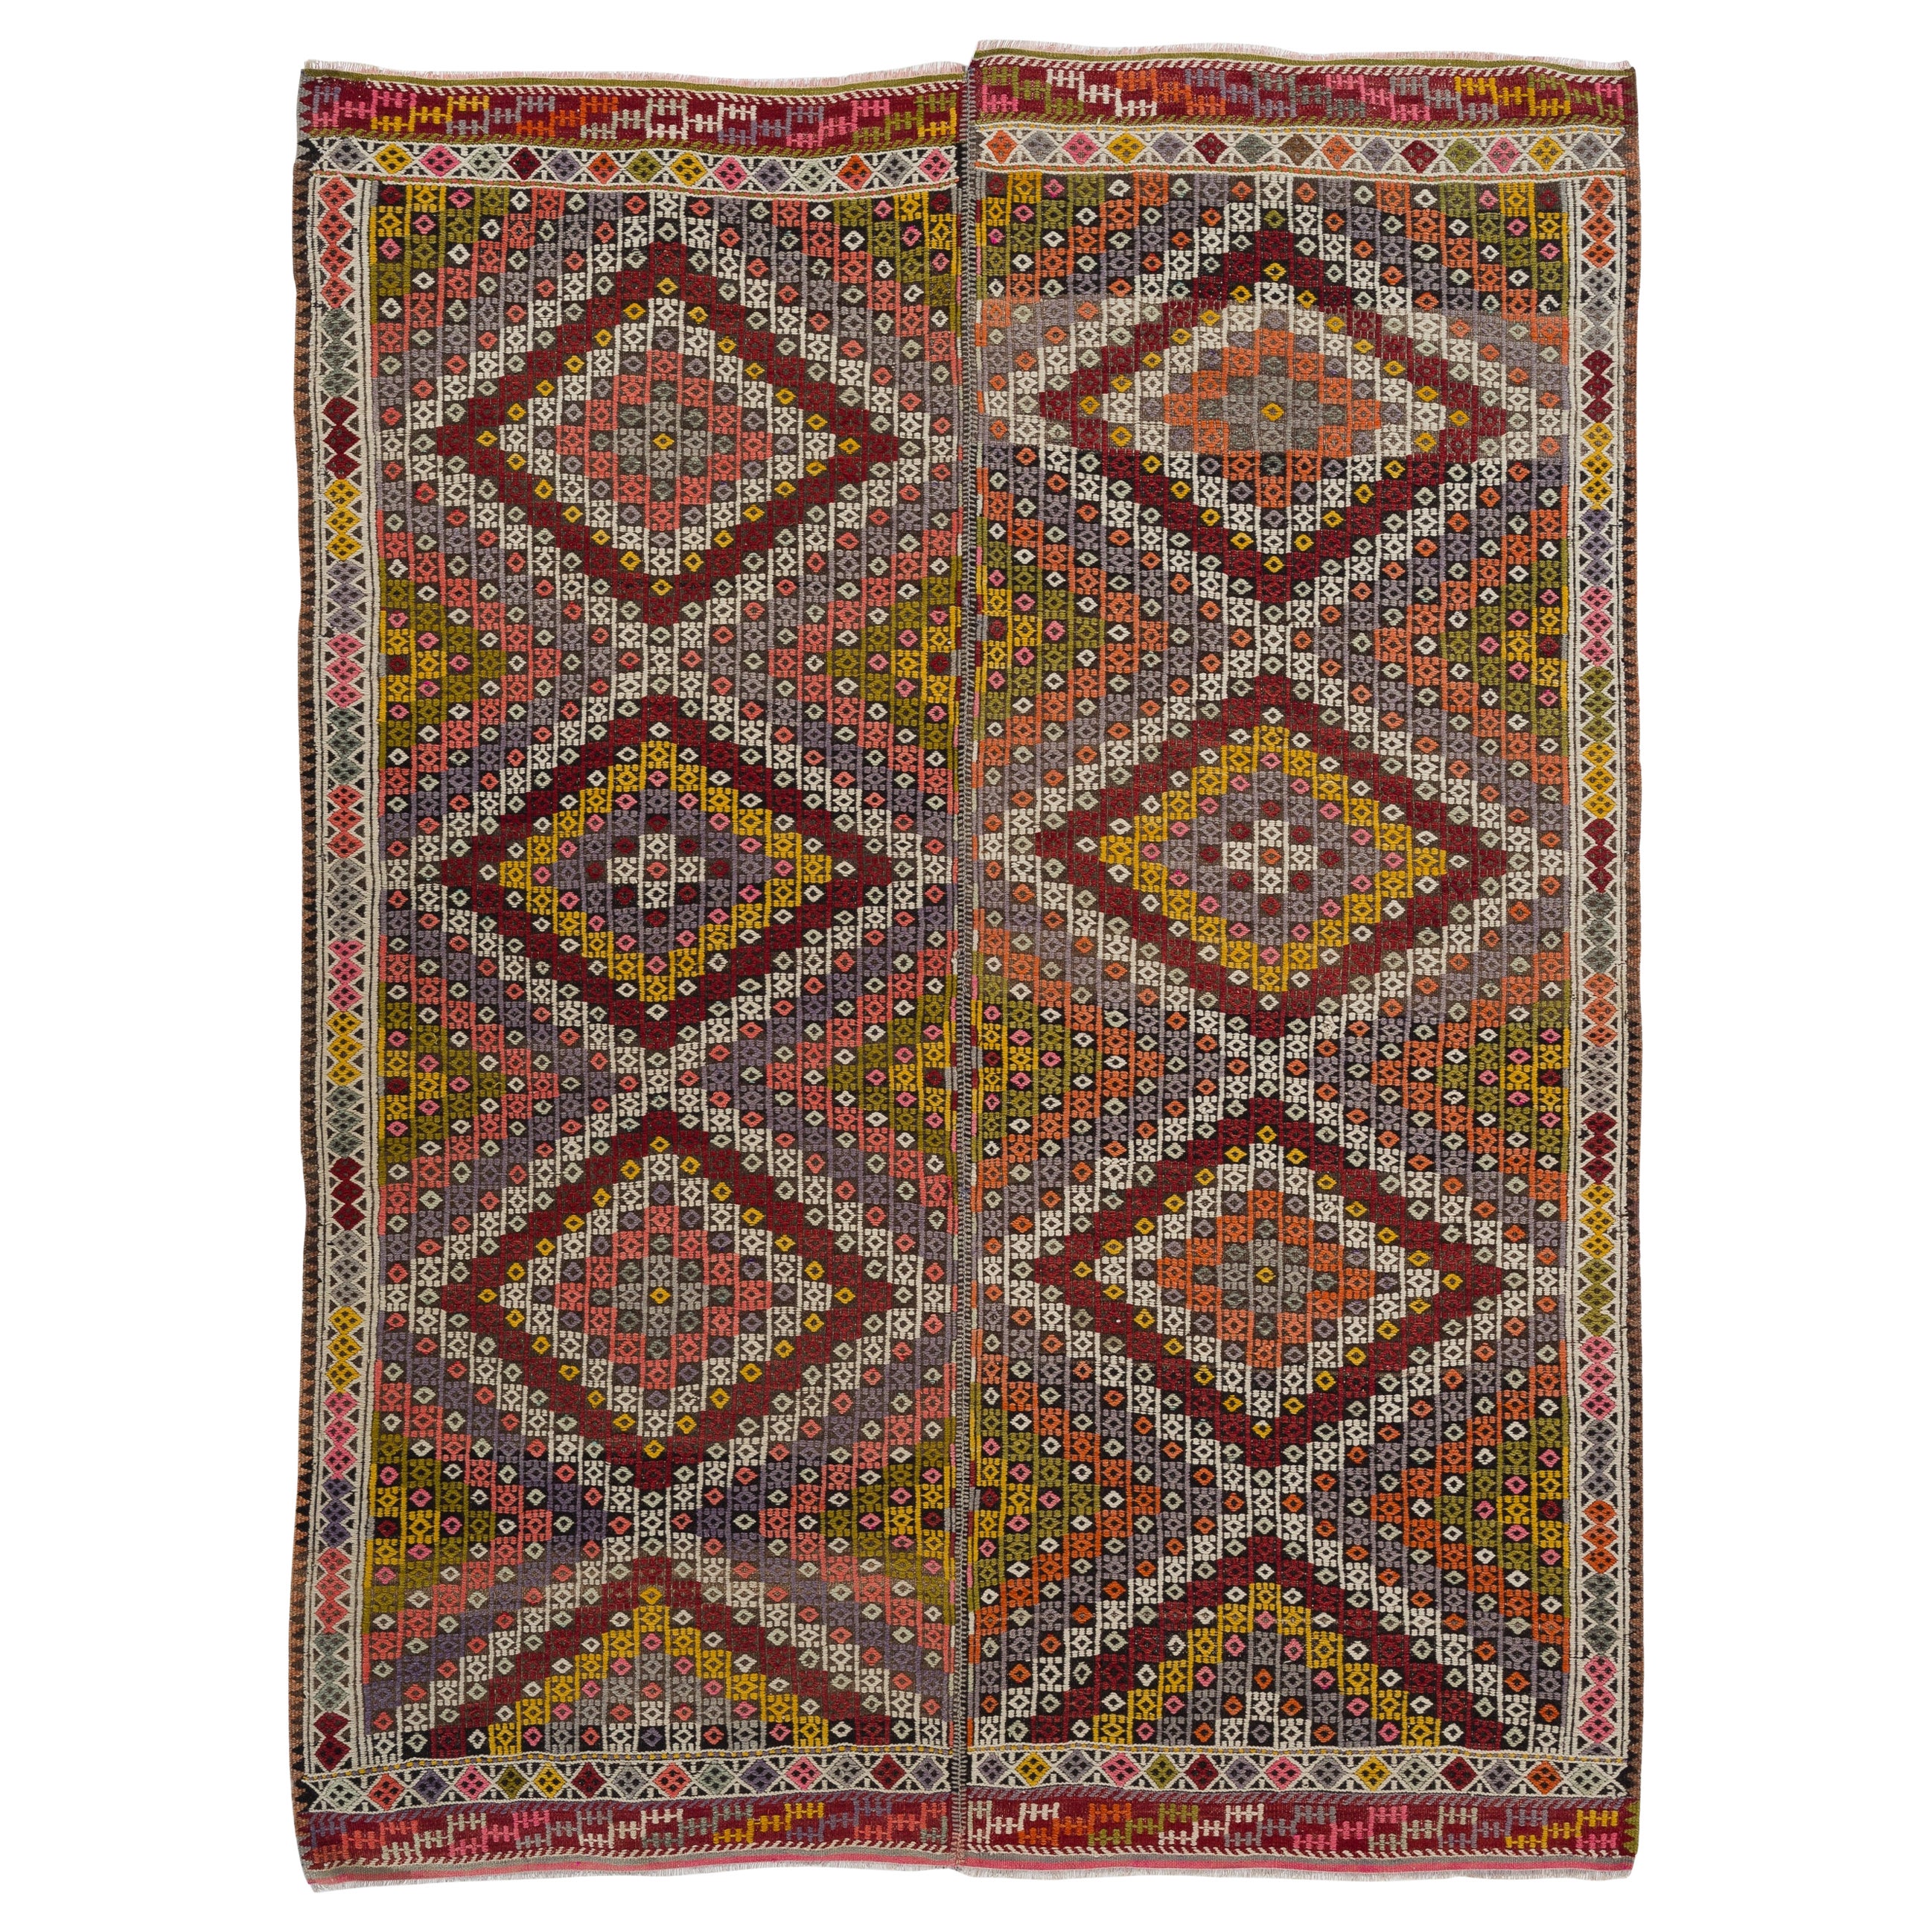 6x8 Ft Multicolored Hand-Woven Turkish Jijim Kilim. Vintage Geometric Design Rug